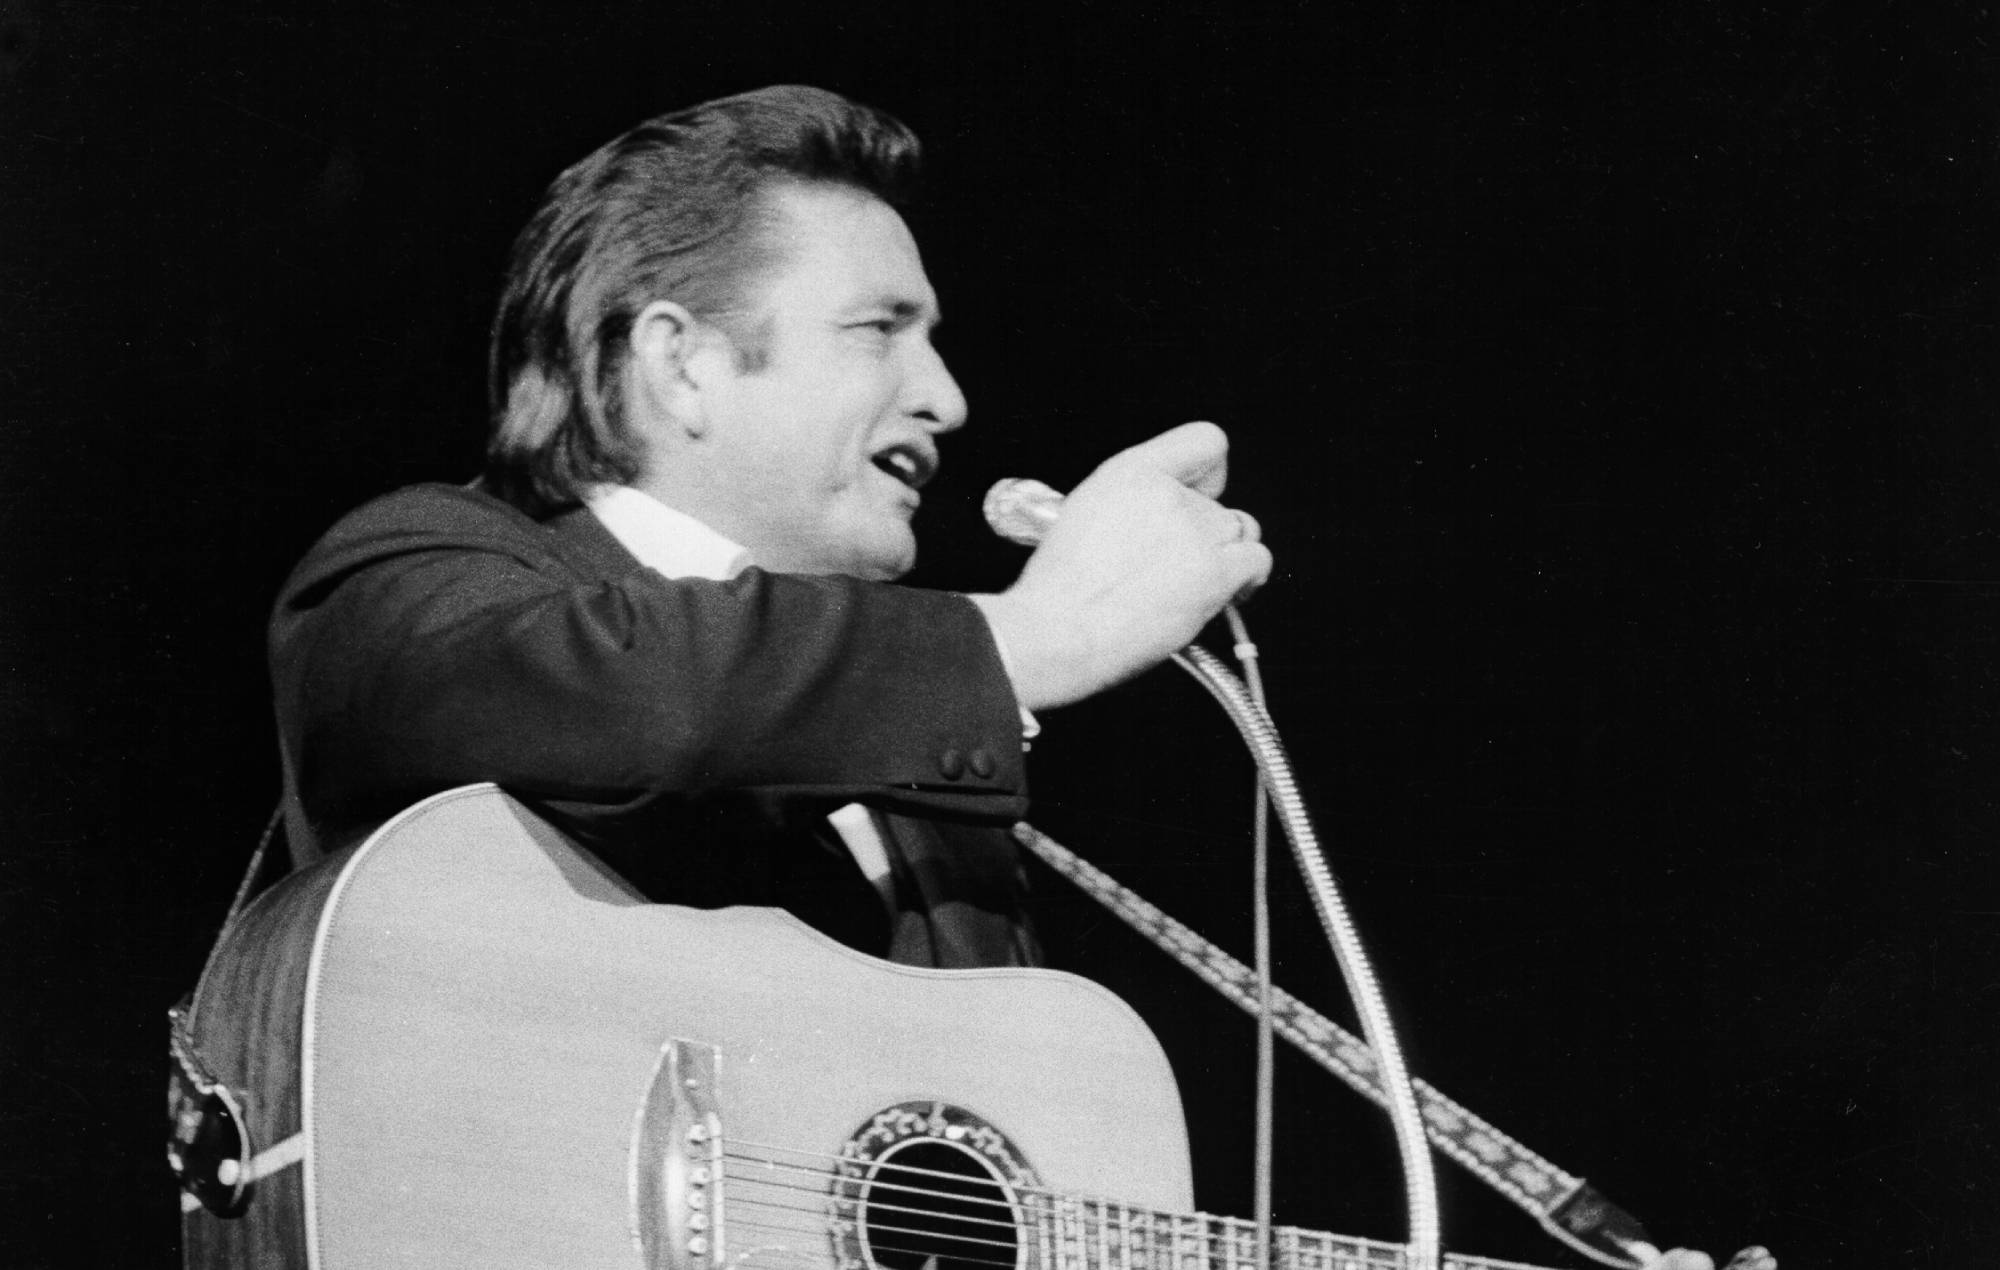 Por fin se publicará un álbum en directo de Johnny Cash de 1968